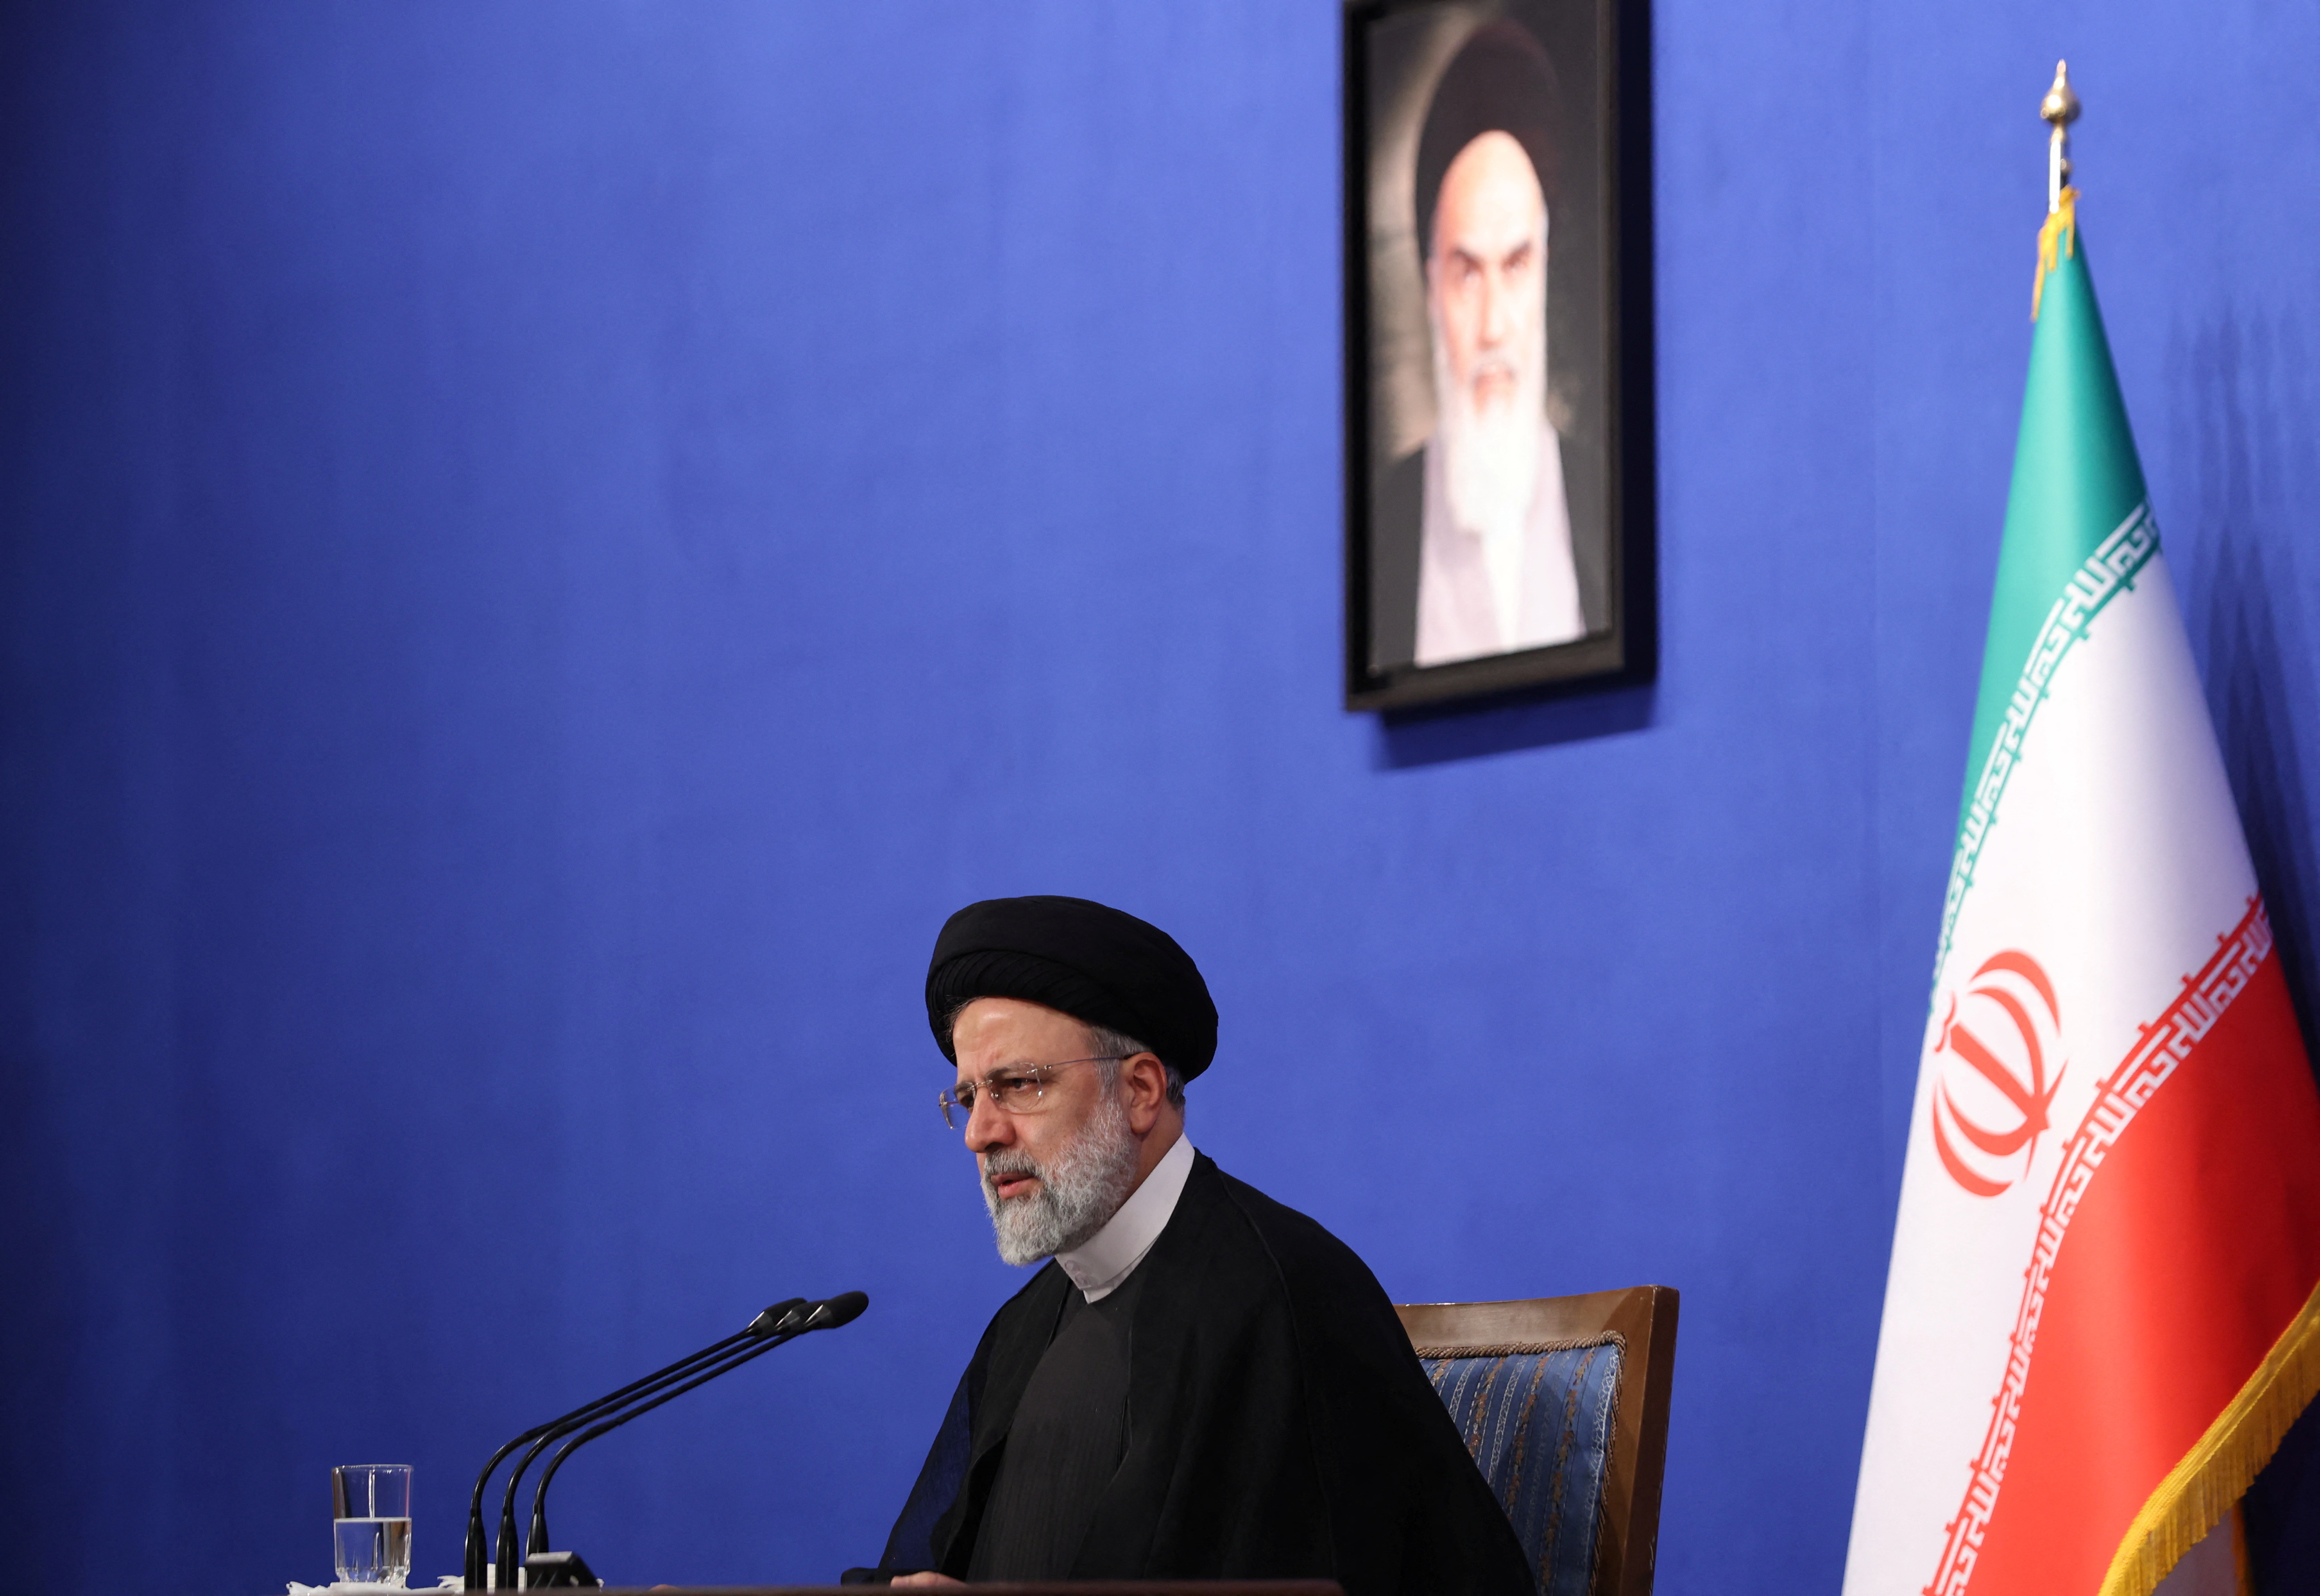 El régimen iraní continúa violando sus compromisos nucleares (Majid Asgaripour/WANA/via REUTERS)